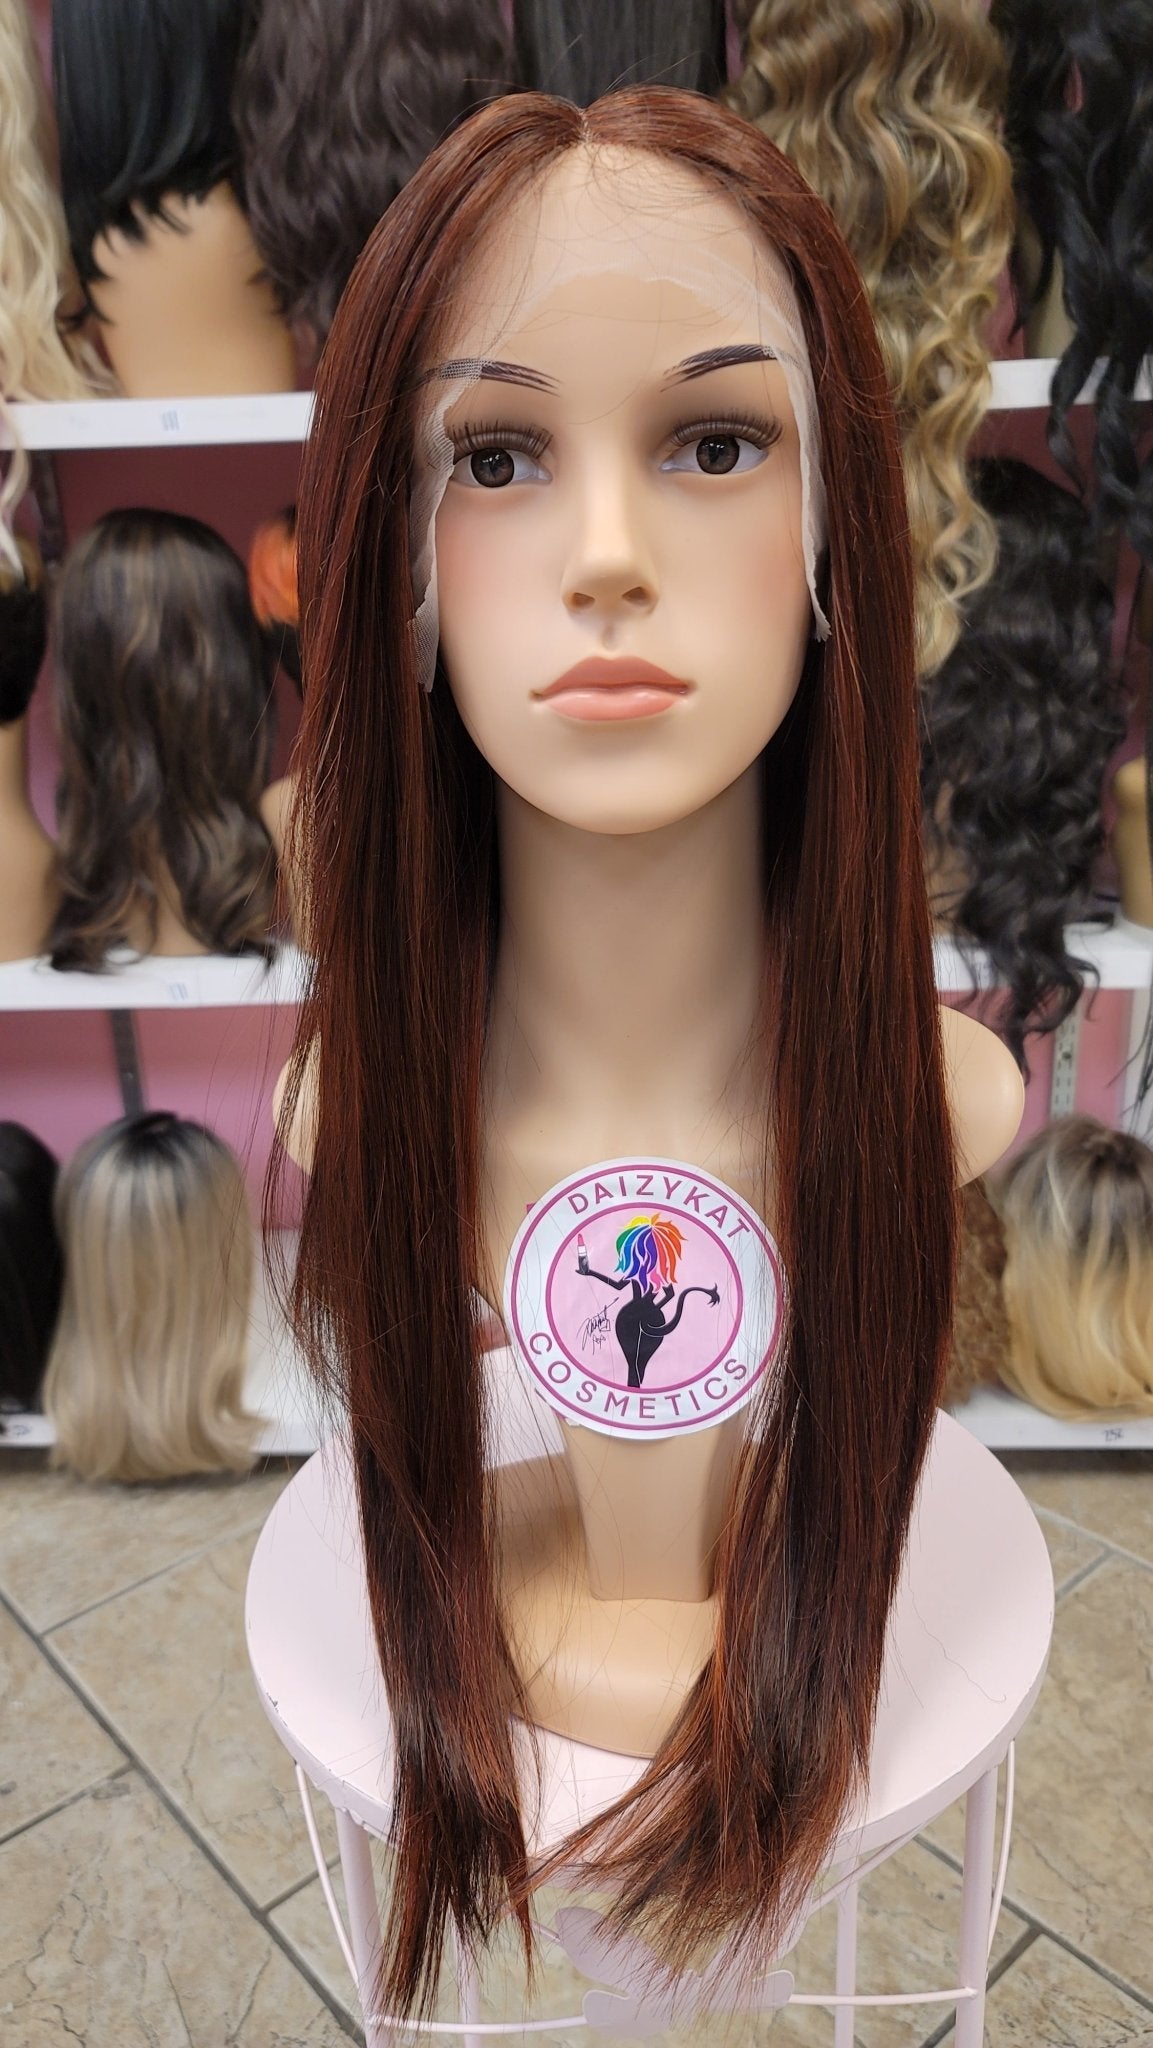 343 Alex - Middle Part Lace Front Wig - 4/350 - DaizyKat Cosmetics 343 Alex - Middle Part Lace Front Wig - 4/350 DaizyKat Cosmetics Wigs